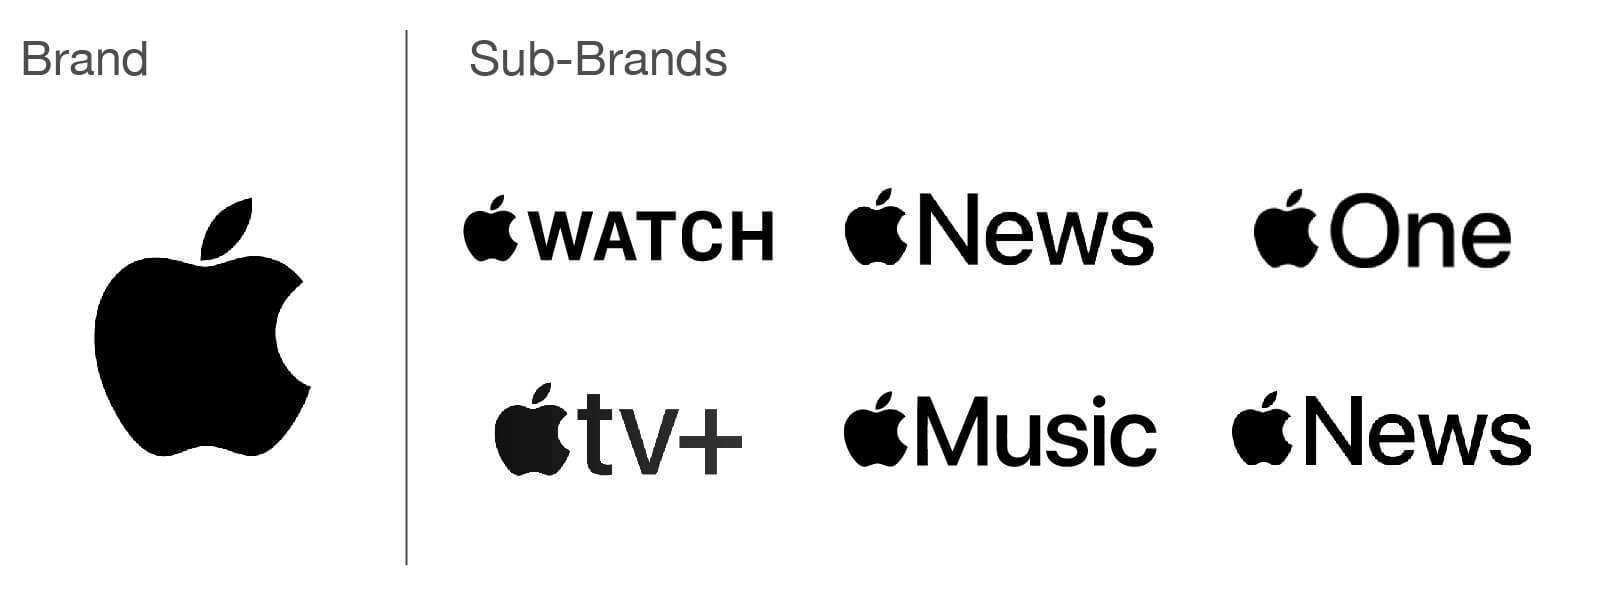 Apple Sub Brands